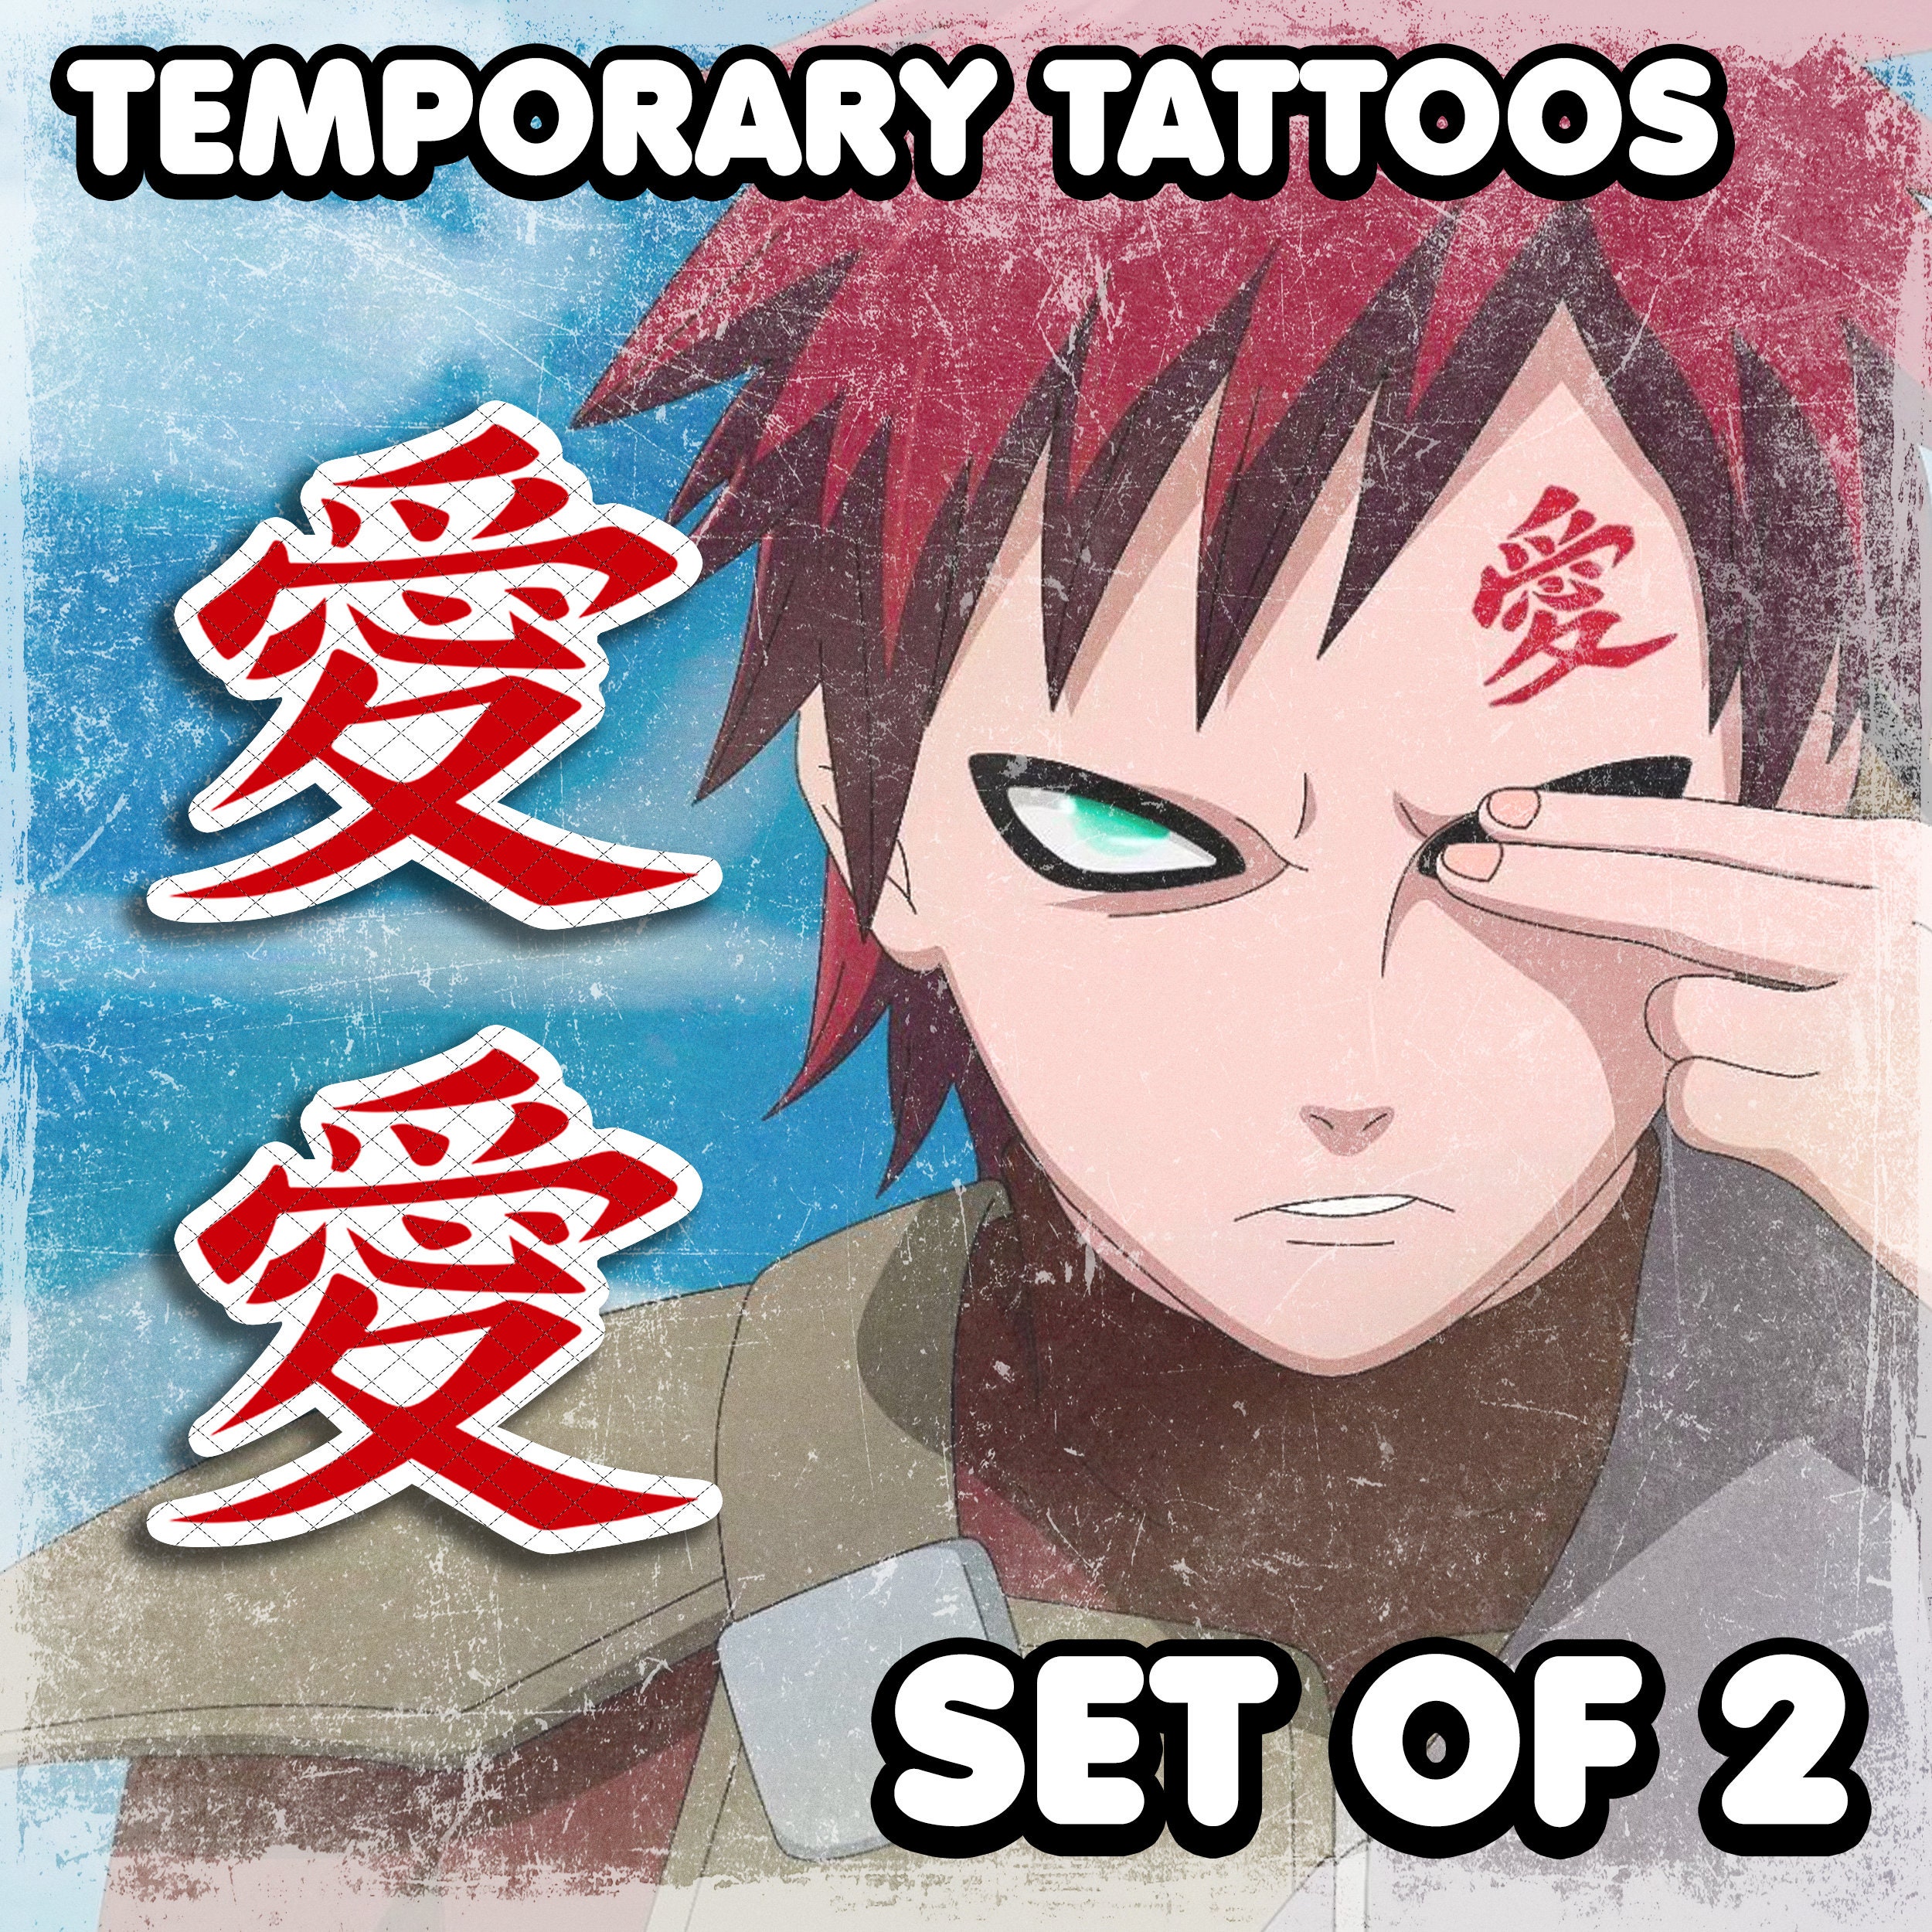 Naruto Sharingan Tattoo Stickers Anime Uchiha Itachi Figures Waterproof  Temporary Tattoo Stickers Toys for Kids Christmas